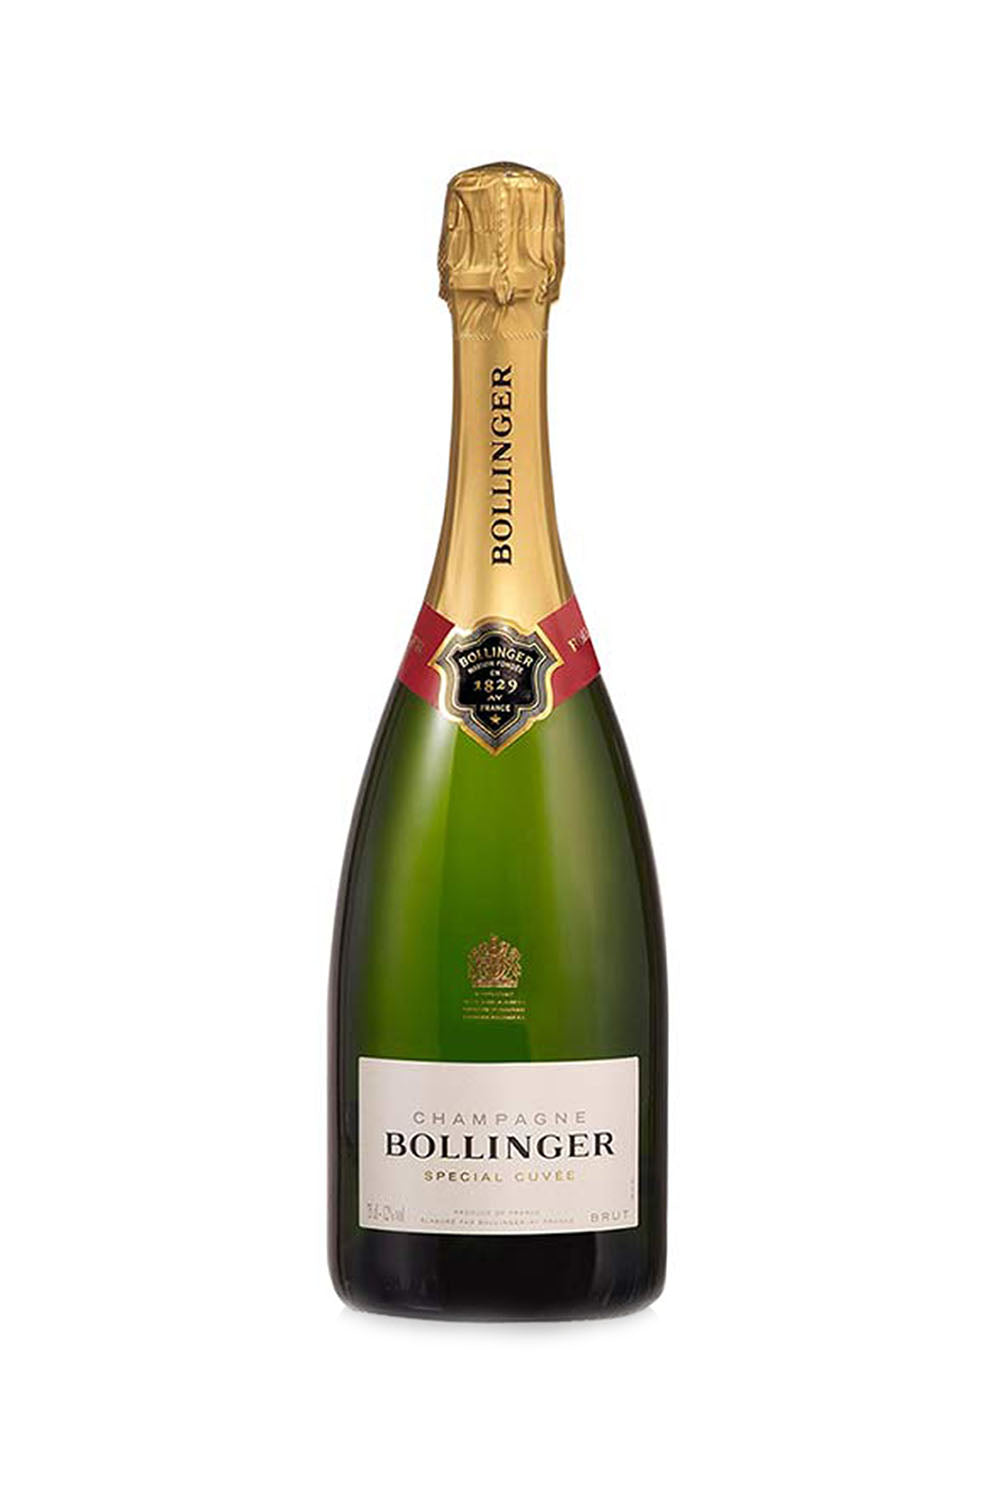 Bollinger Champagne SNG